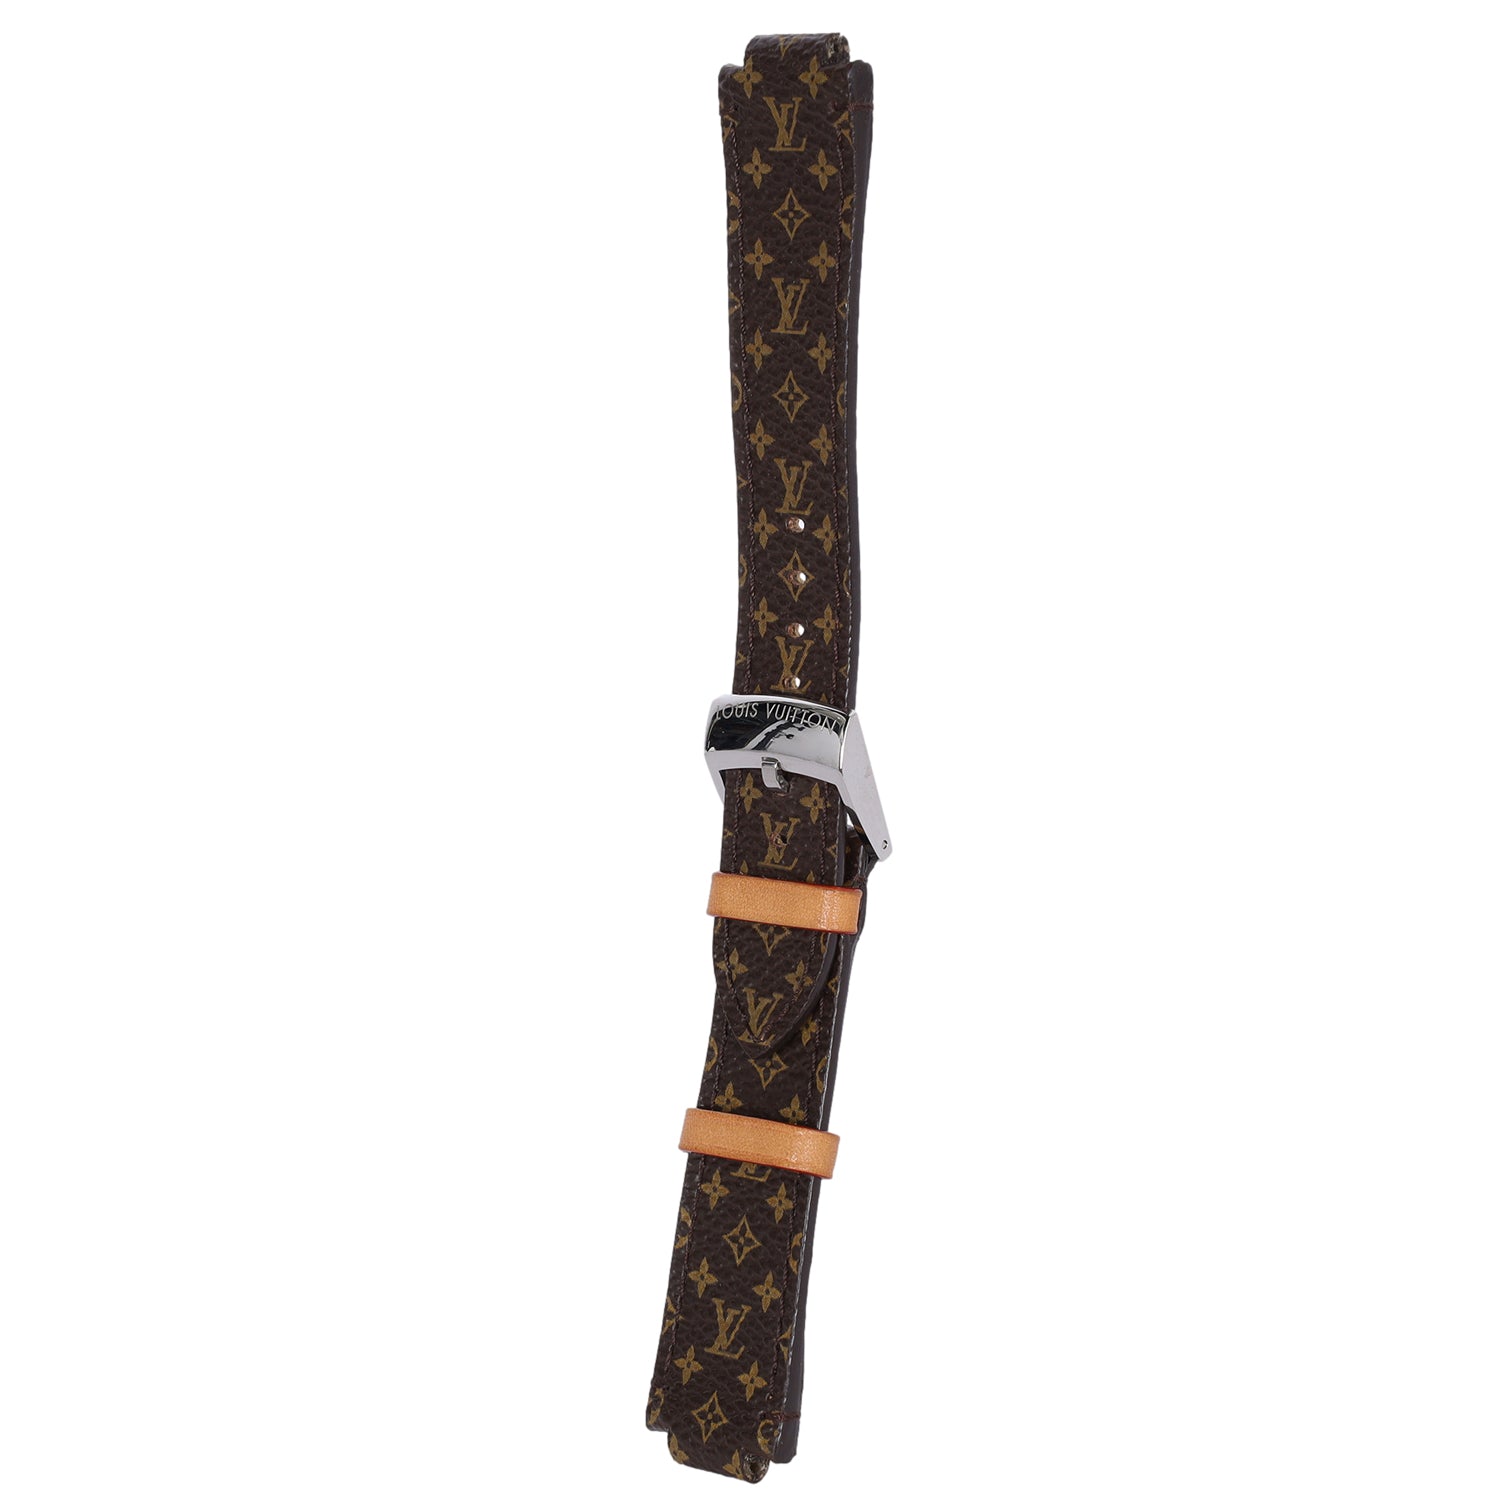 Genuine New LOUIS VUITTON Tambour Watch Band Bracelet Link 13mm #494